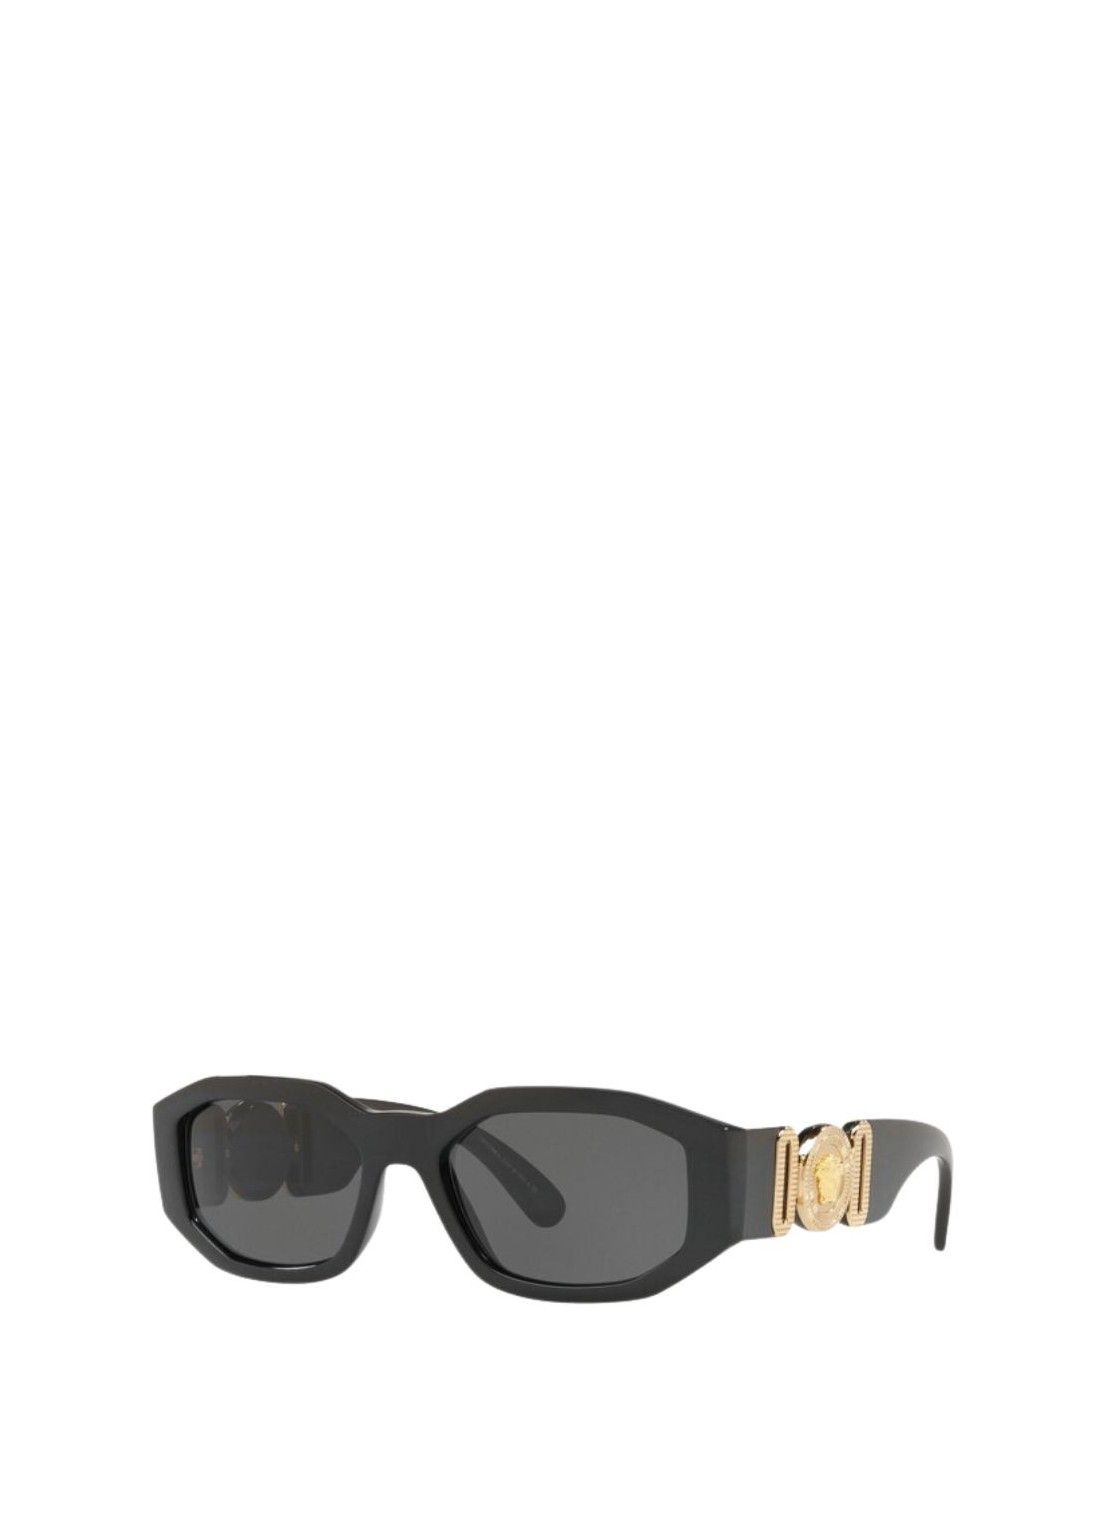 Gafas versace sunglasses woman 0ve4361 0ve4361 gb1 87 talla 53
 